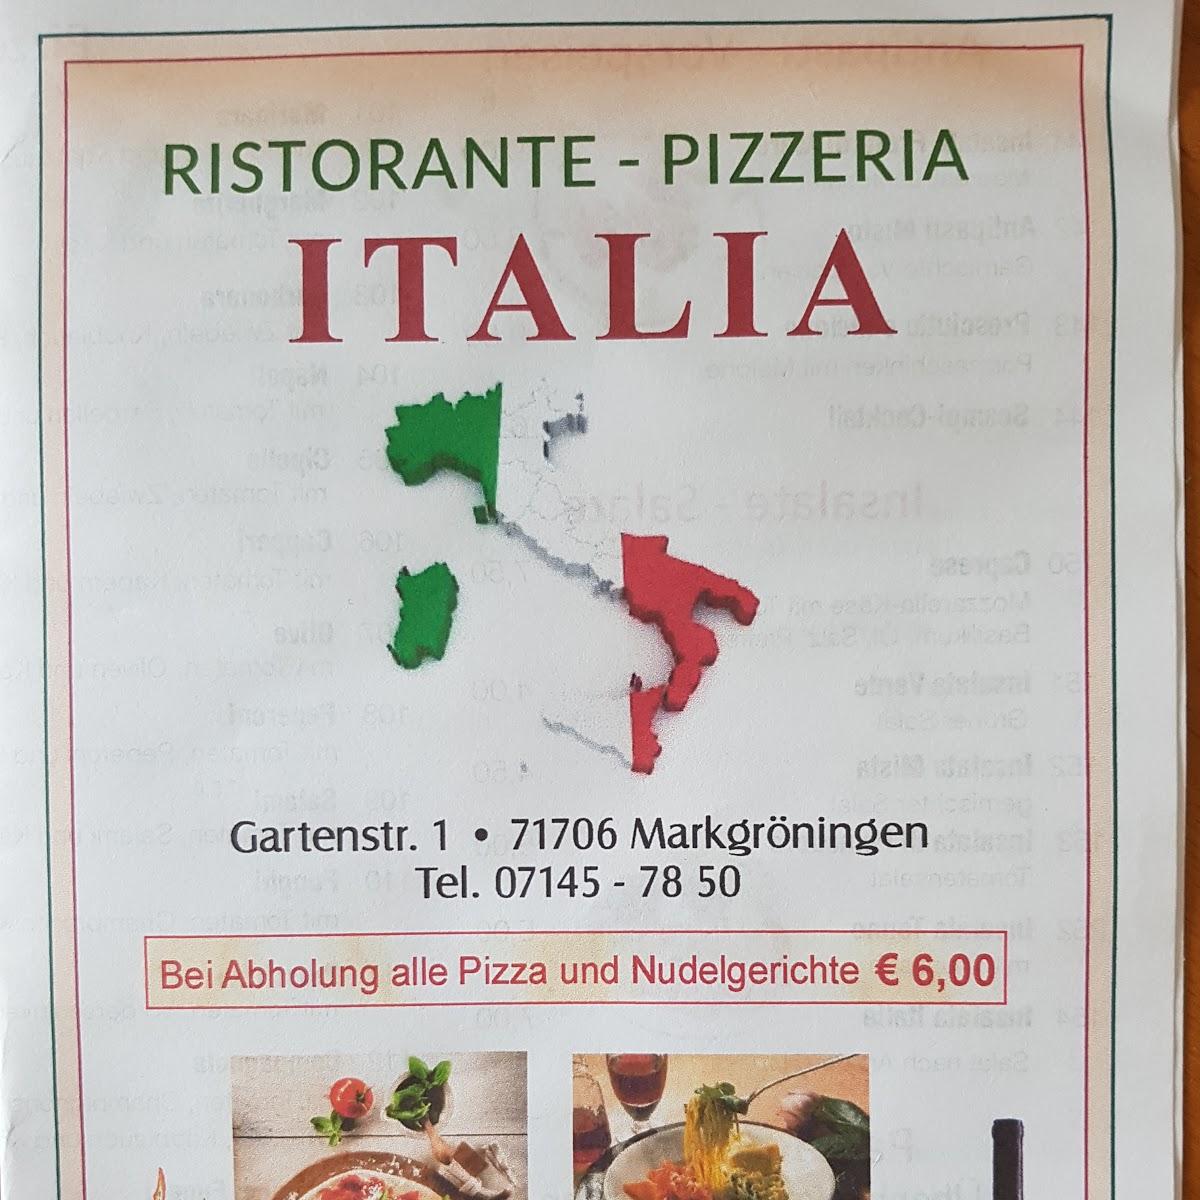 Restaurant "Ristorante Pizzeria Italia" in  Markgröningen